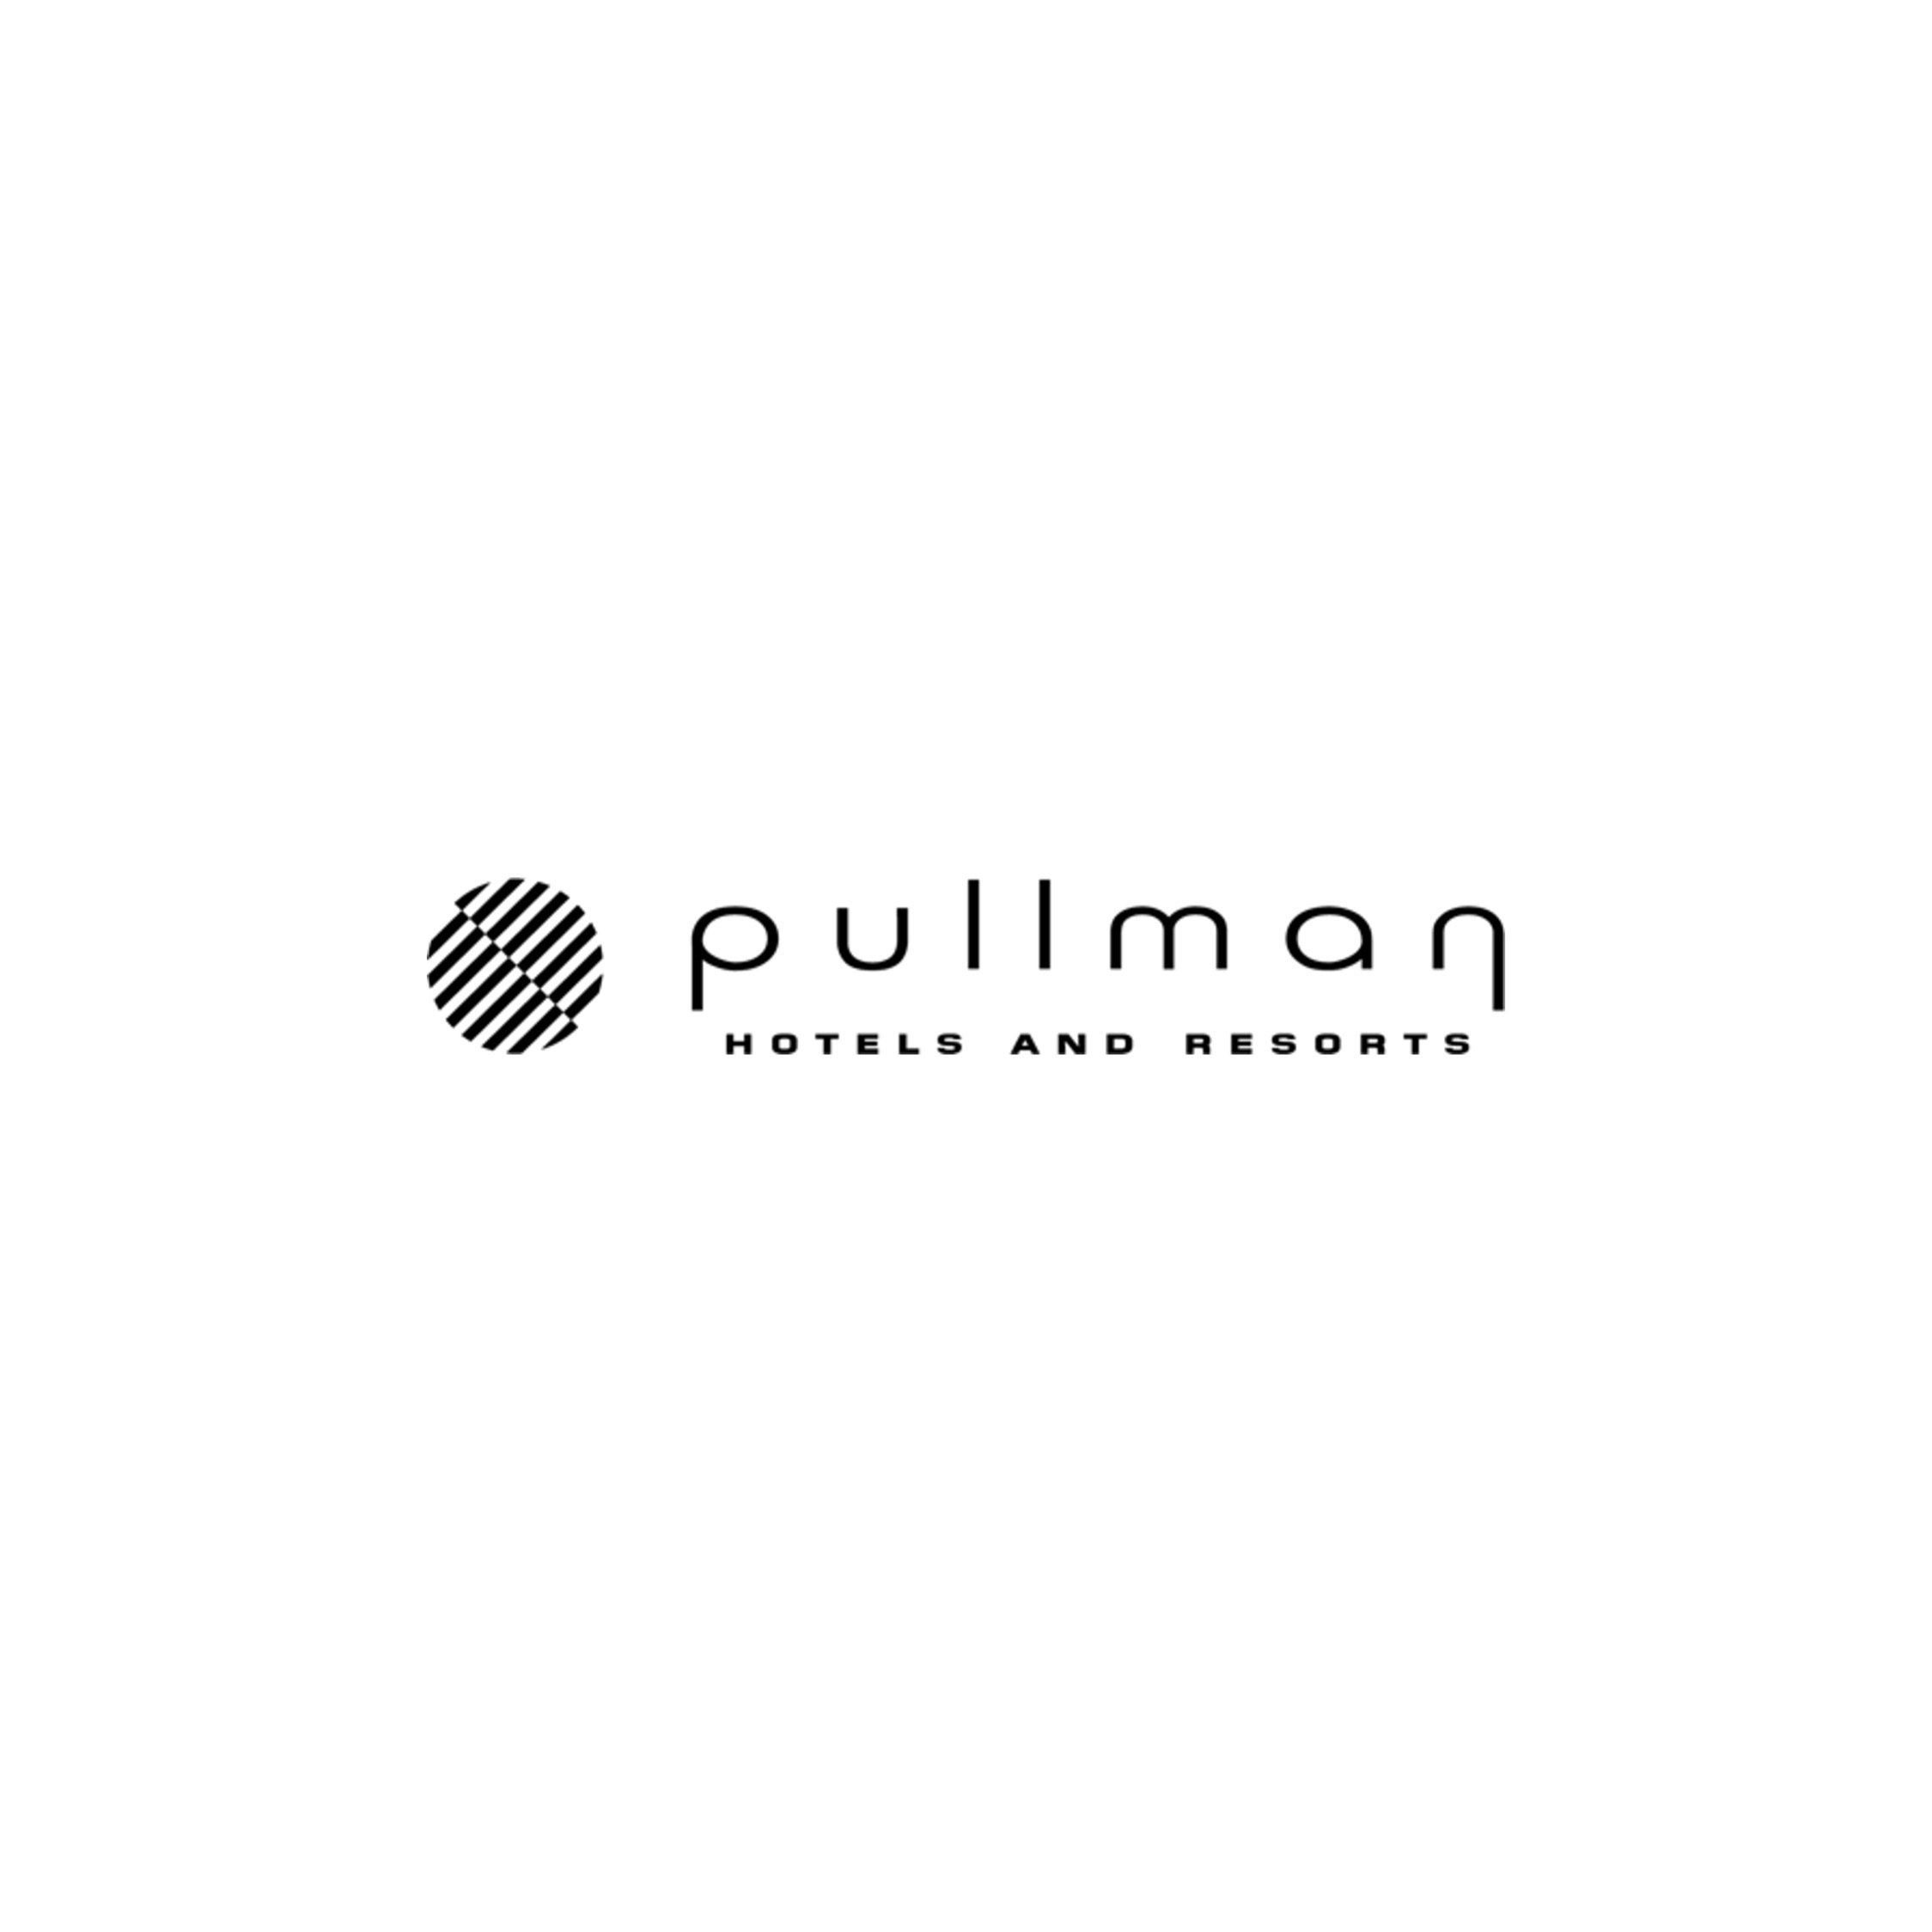 pullman_hotels_and_resorts.jpg